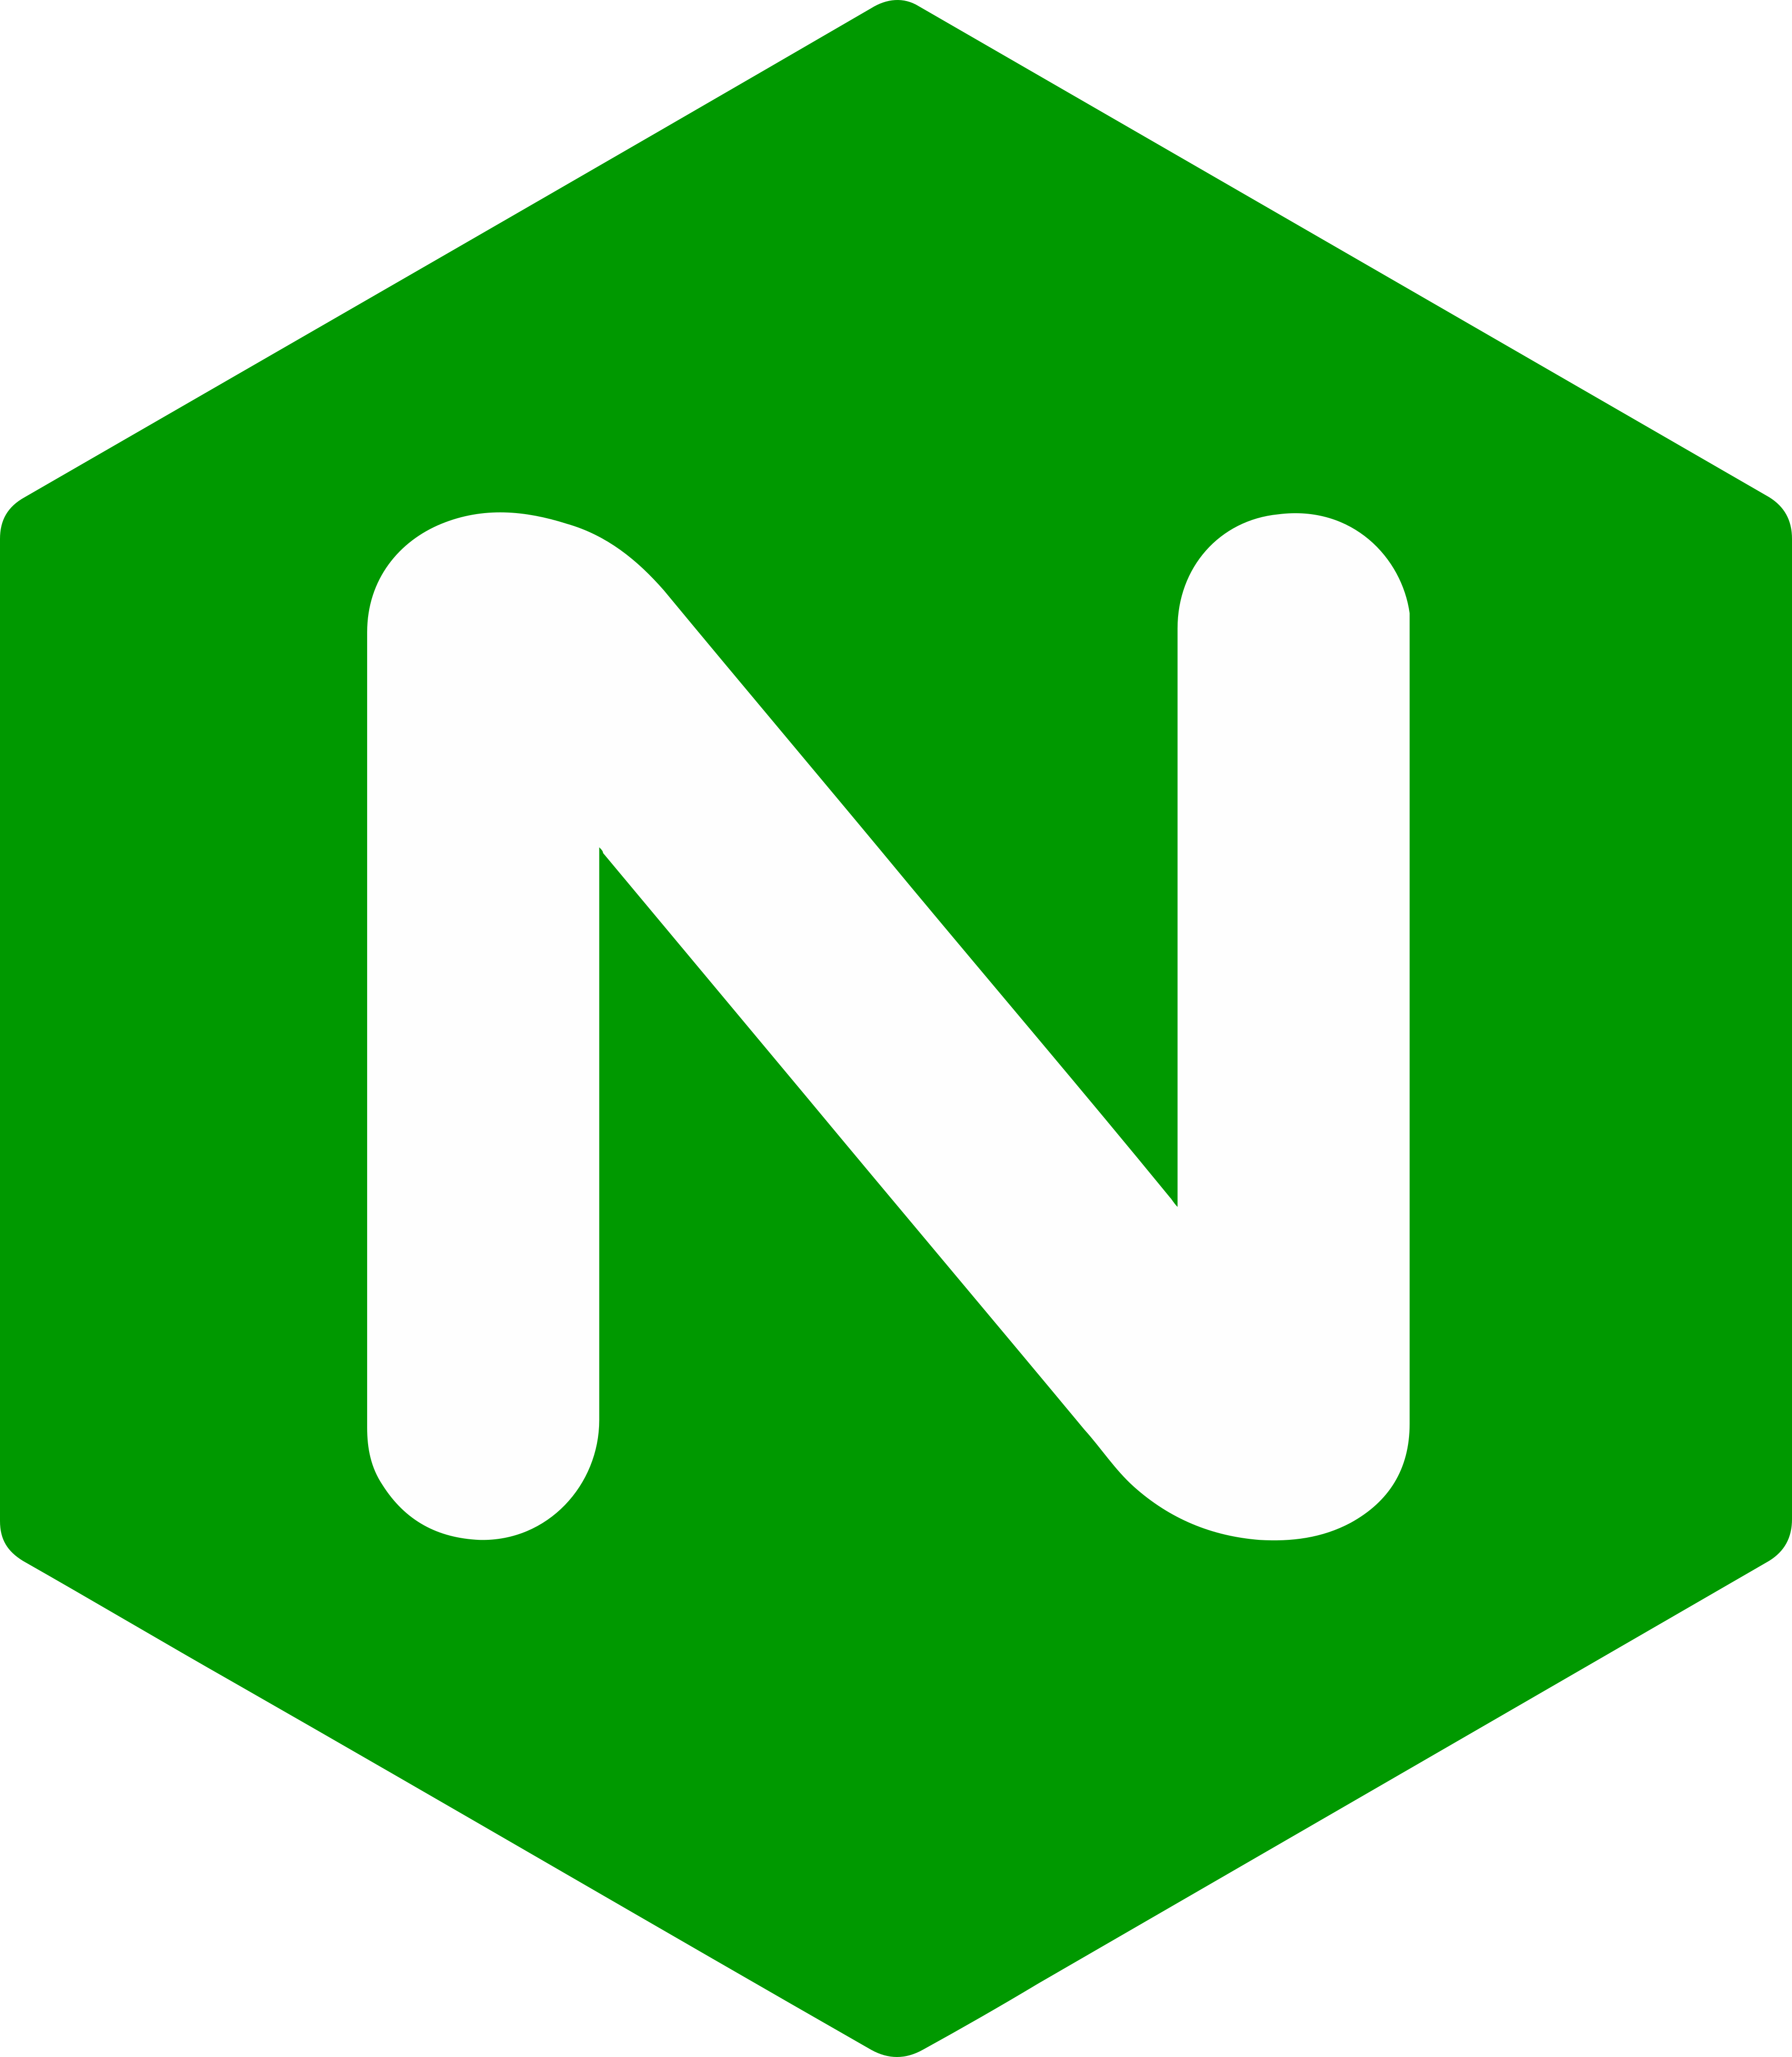 NGINX Configuration Language Support